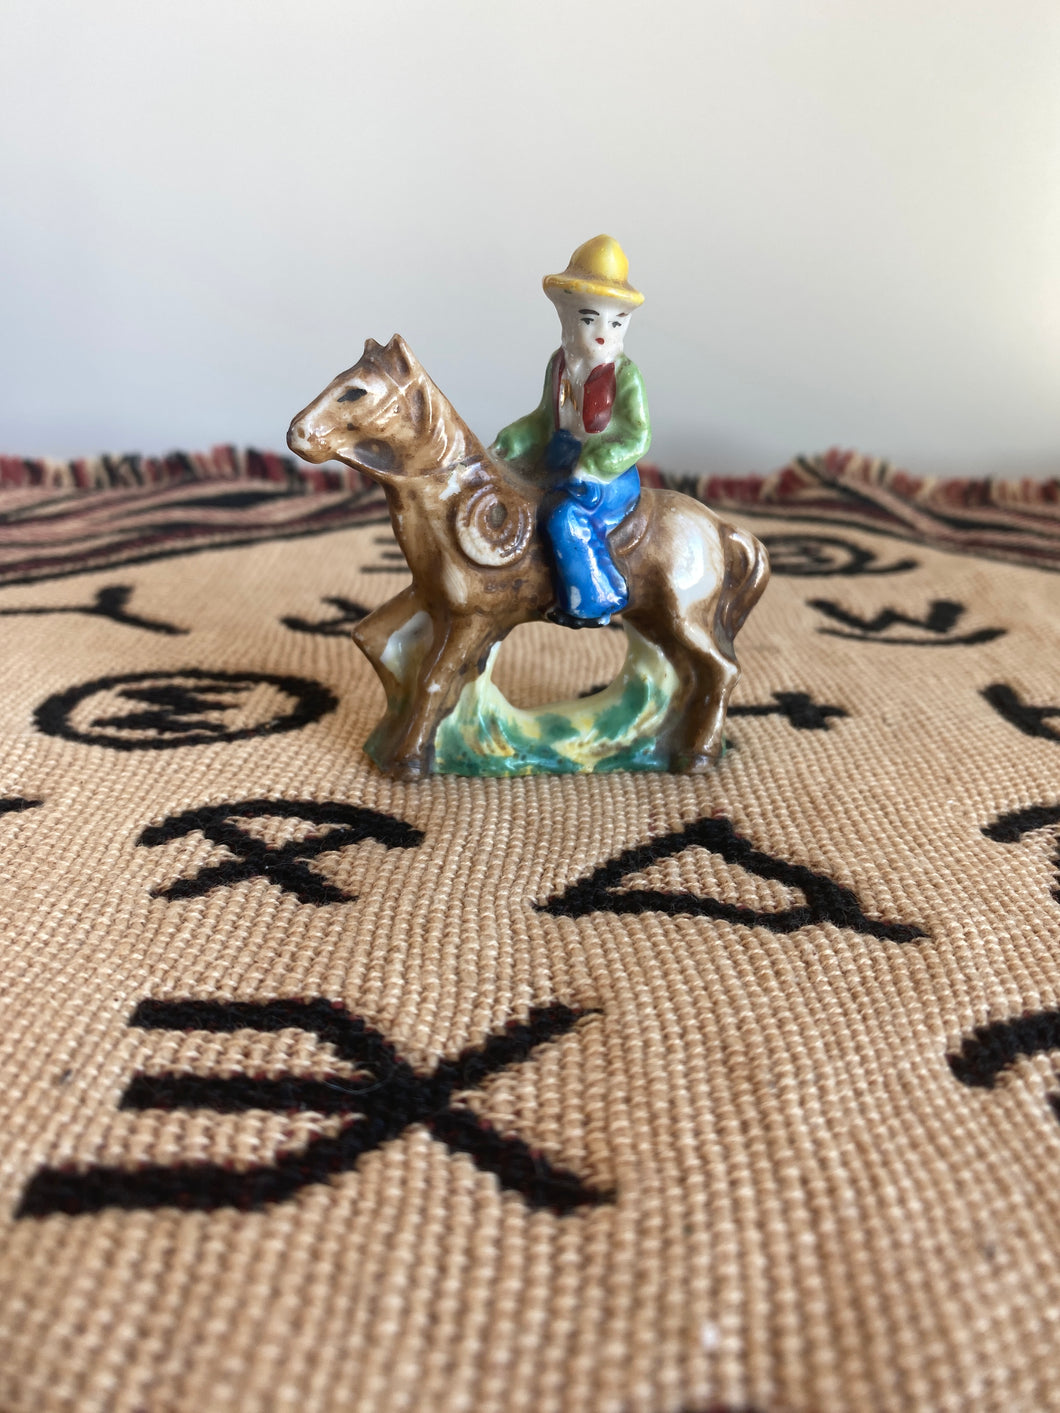 Cowboy on Horse Figurine